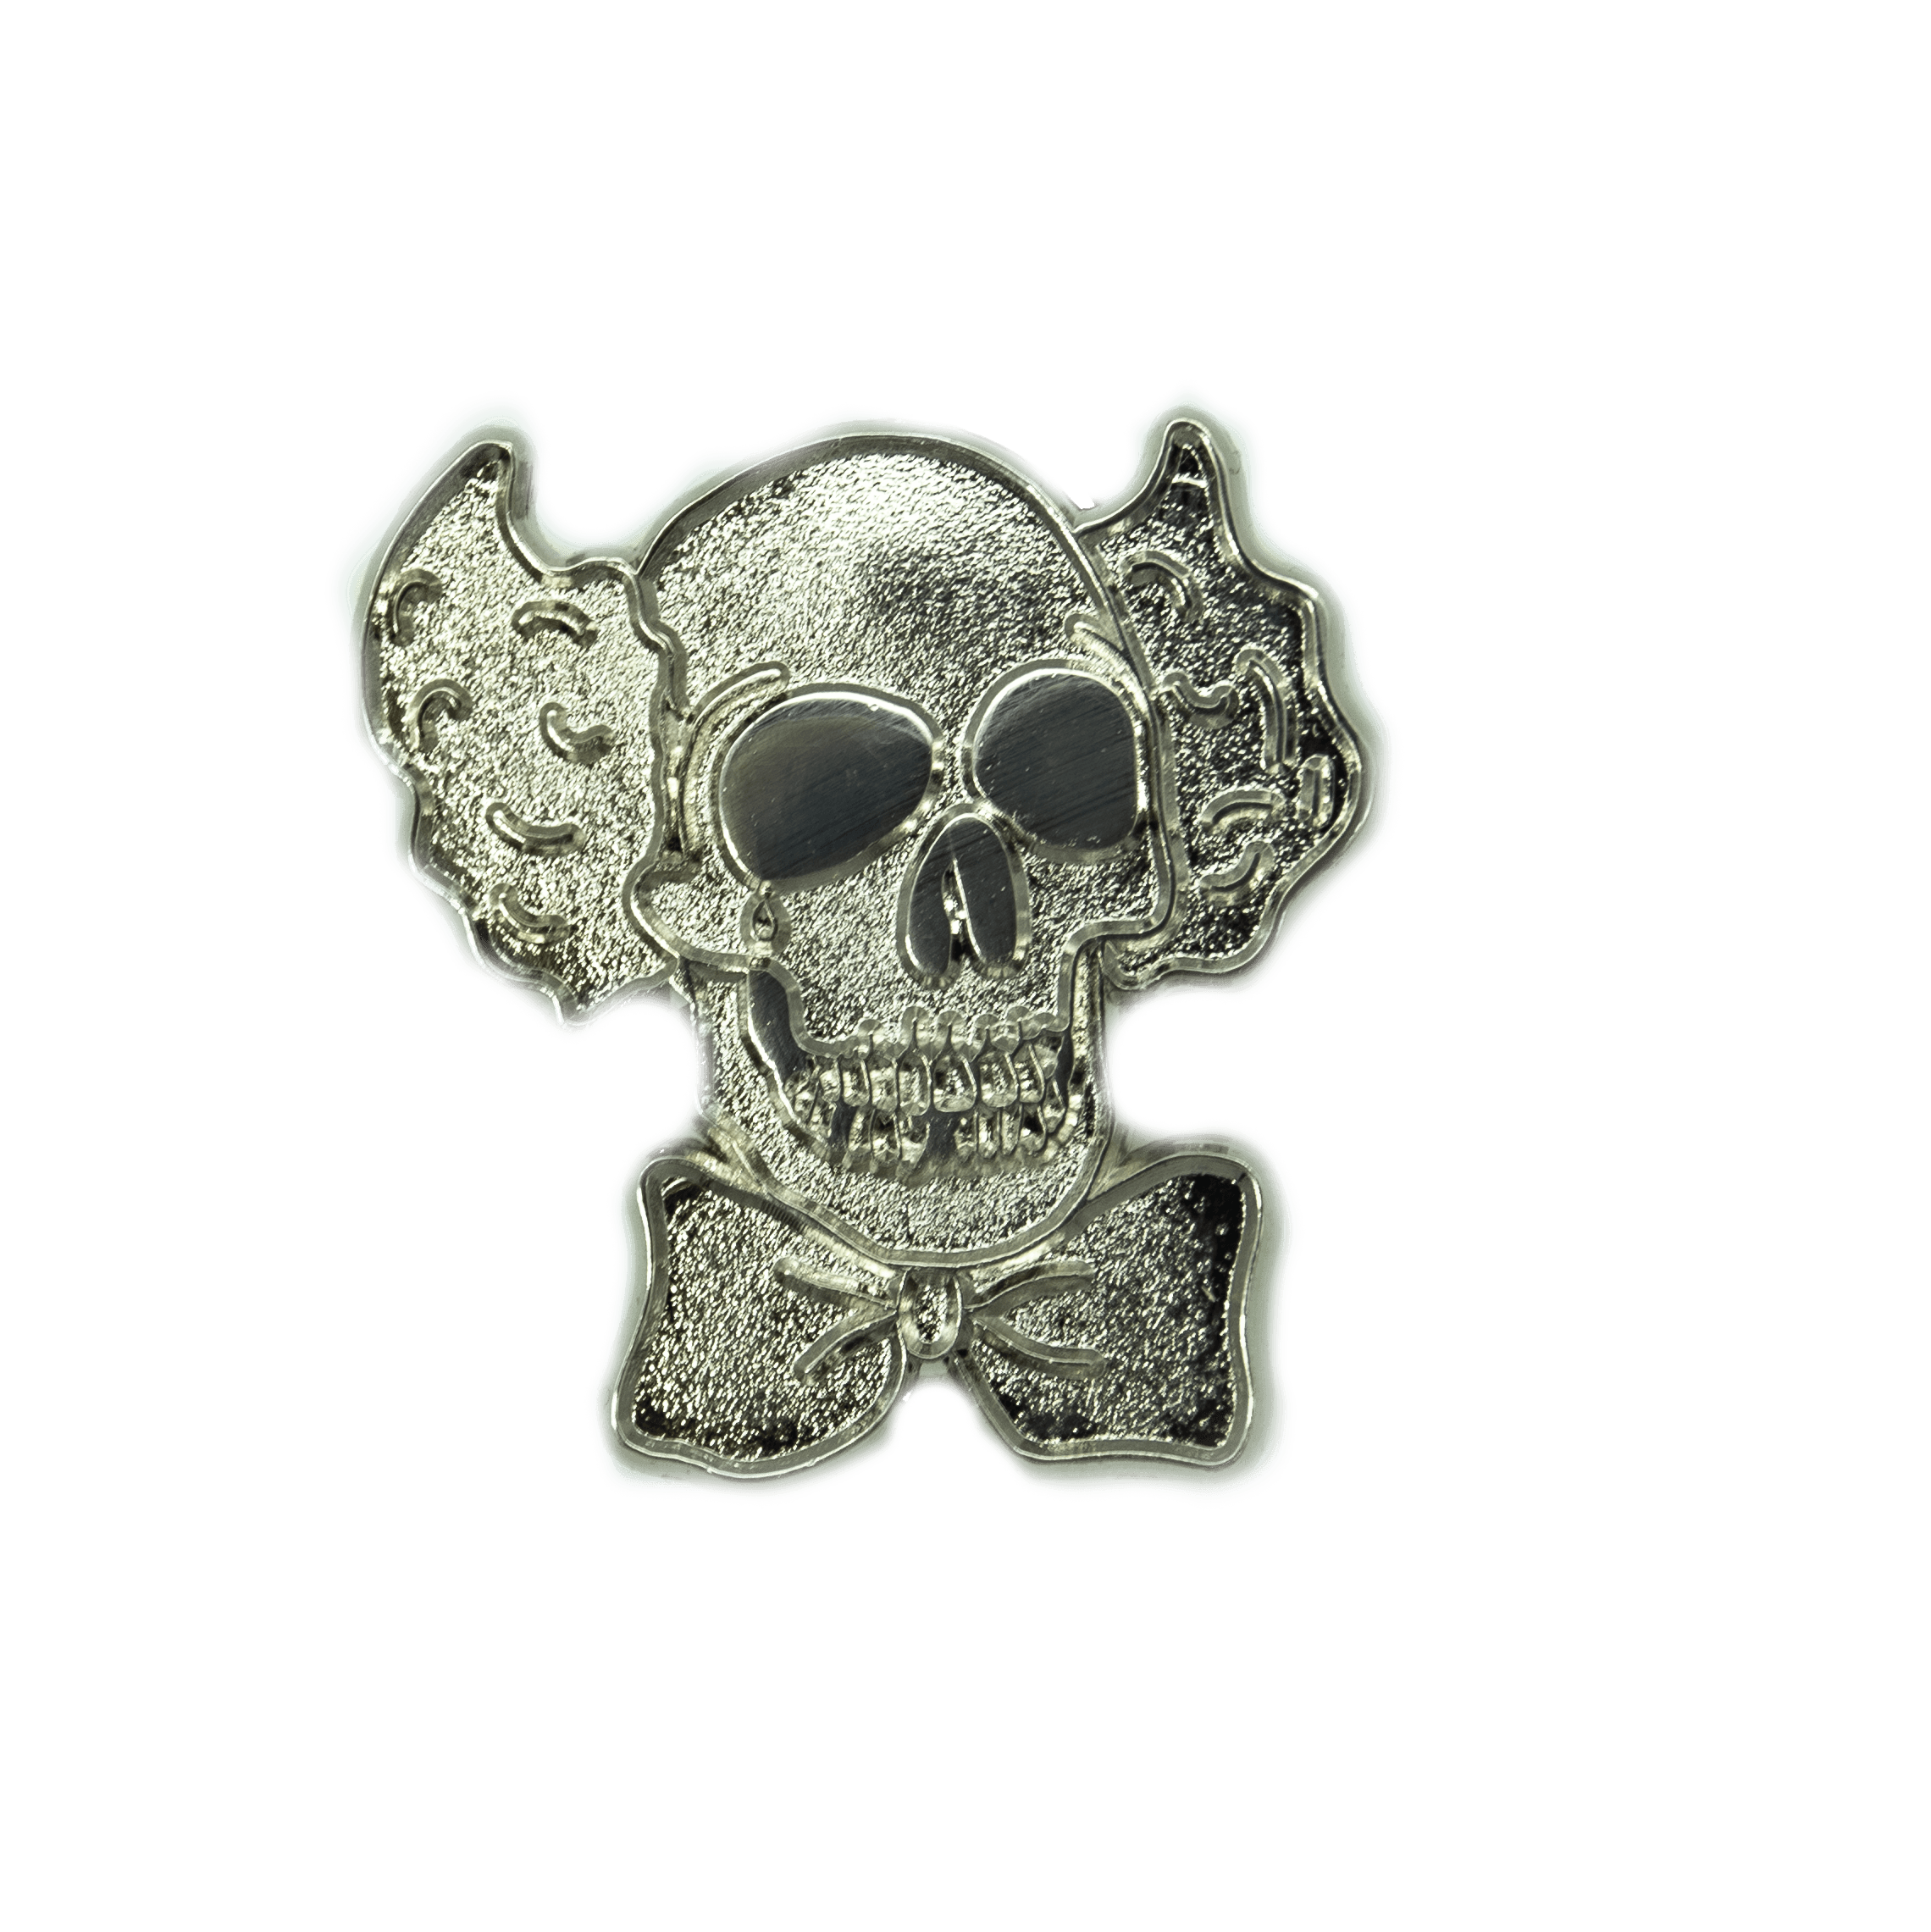 Clown Skull 3 Pin | Raw for Modding